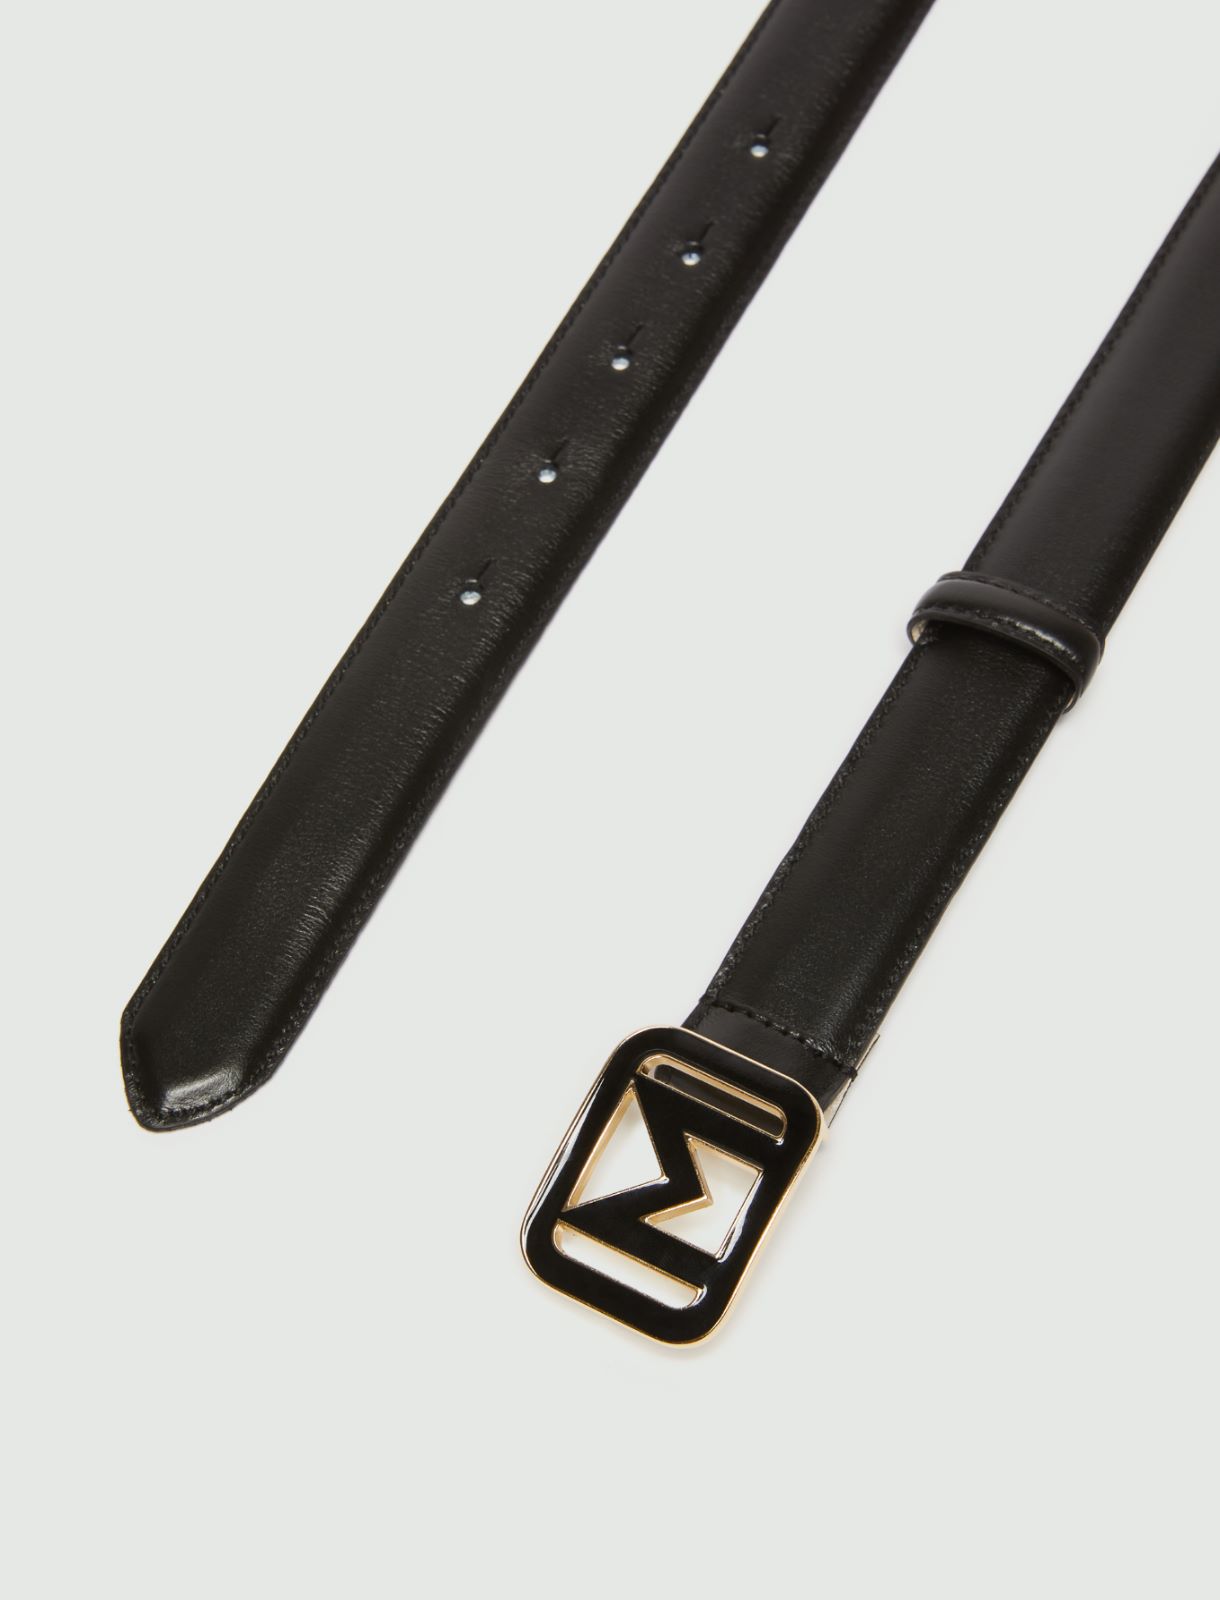 Leather belt - Black - Marina Rinaldi - 2